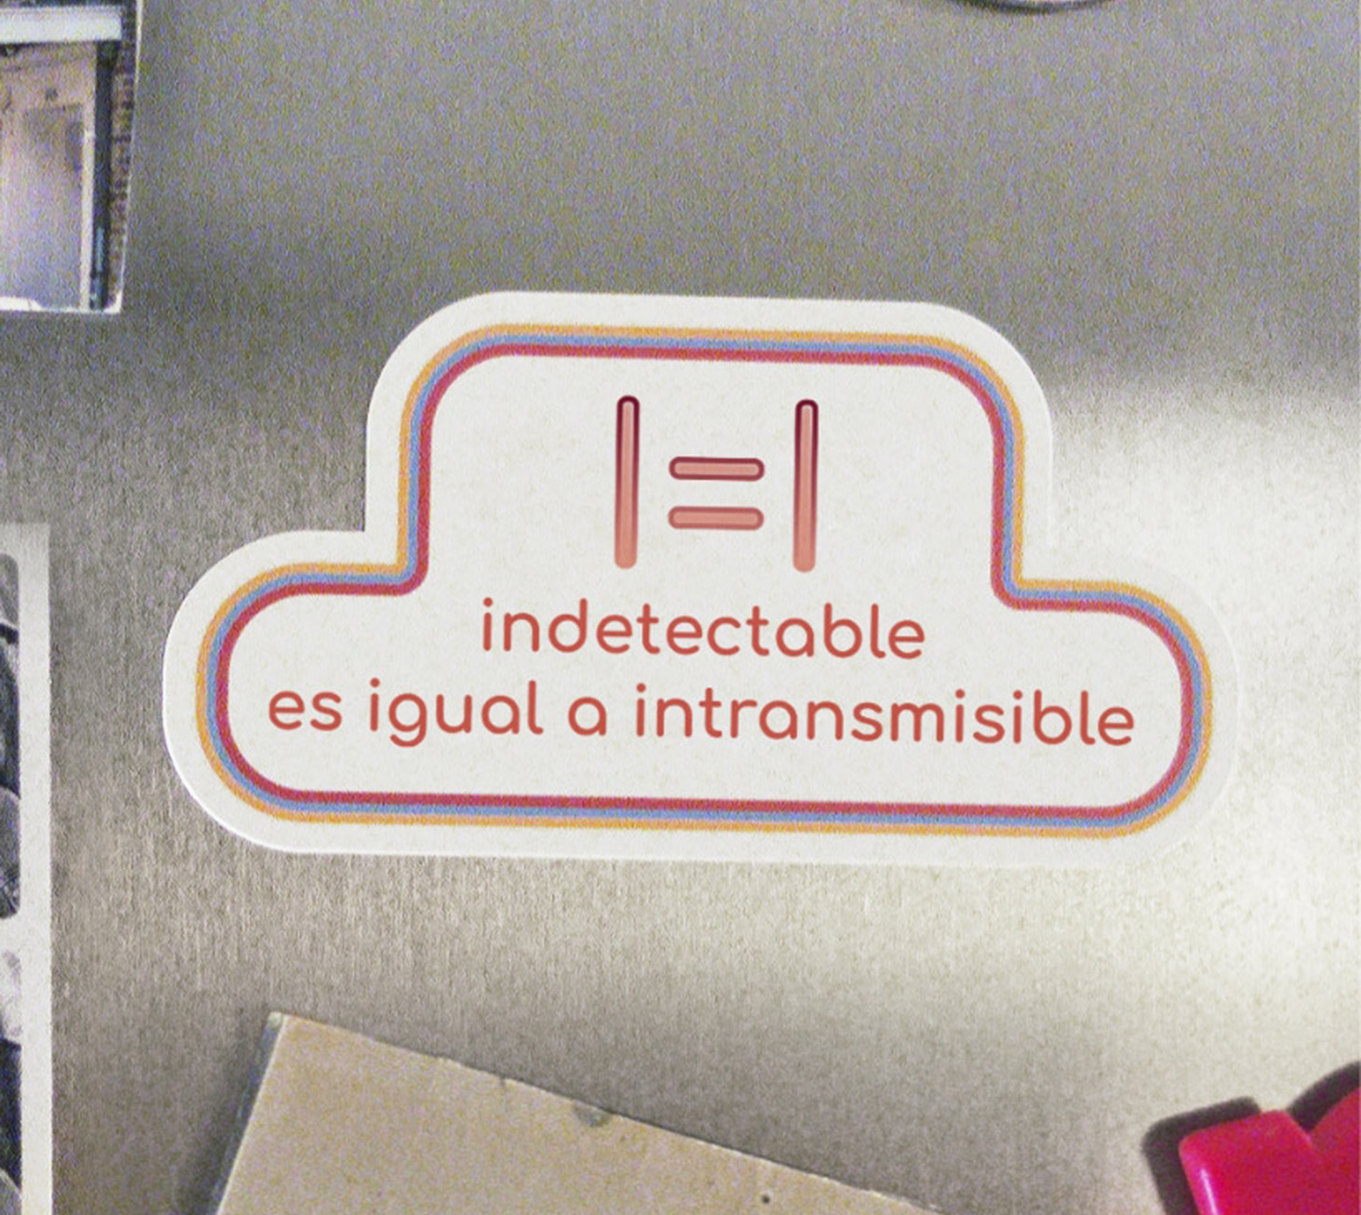 Imagen de I=I (Indetectable es igual a intransmisible)